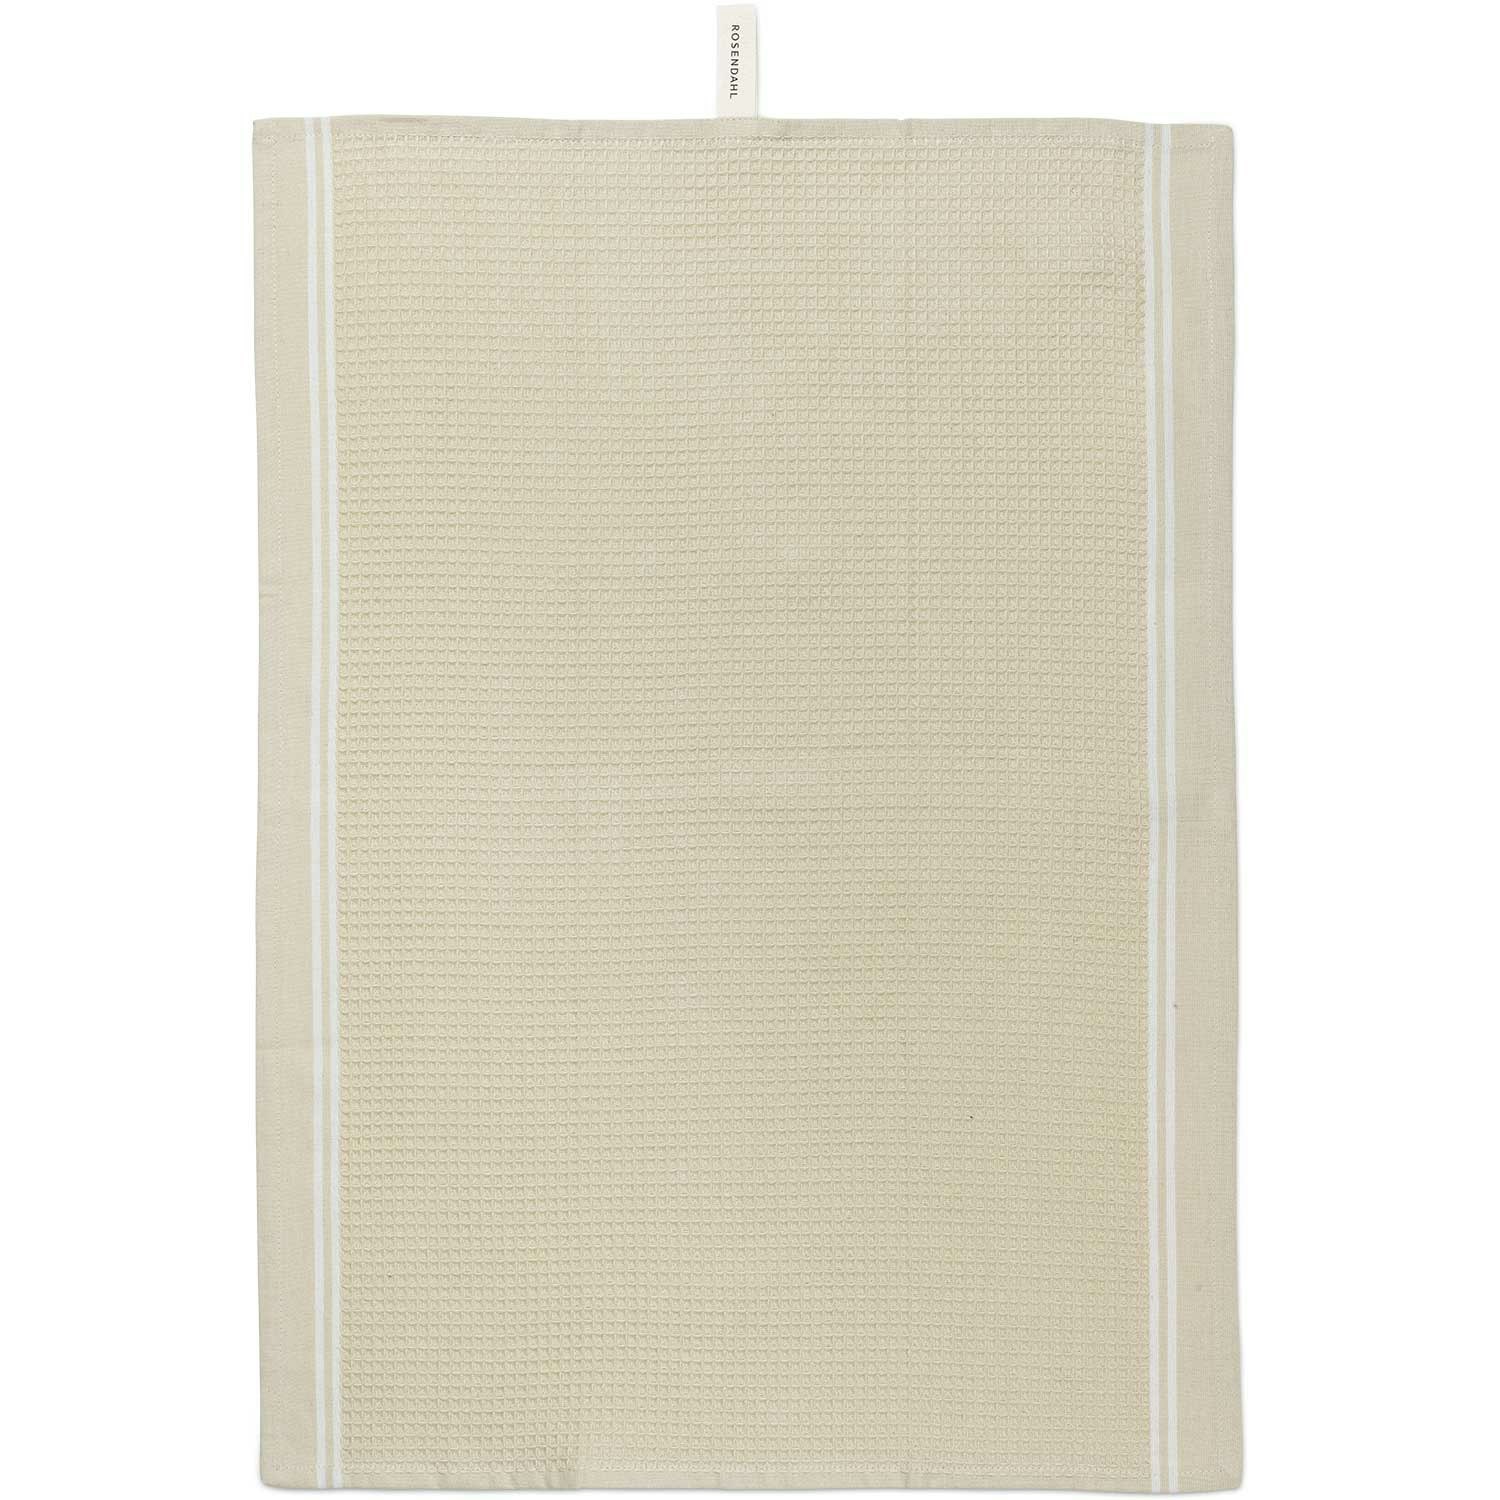 https://royaldesign.com/image/2/rosendahl-copenhagen-alpha-kitchen-towel-50x70-cm-sand-1